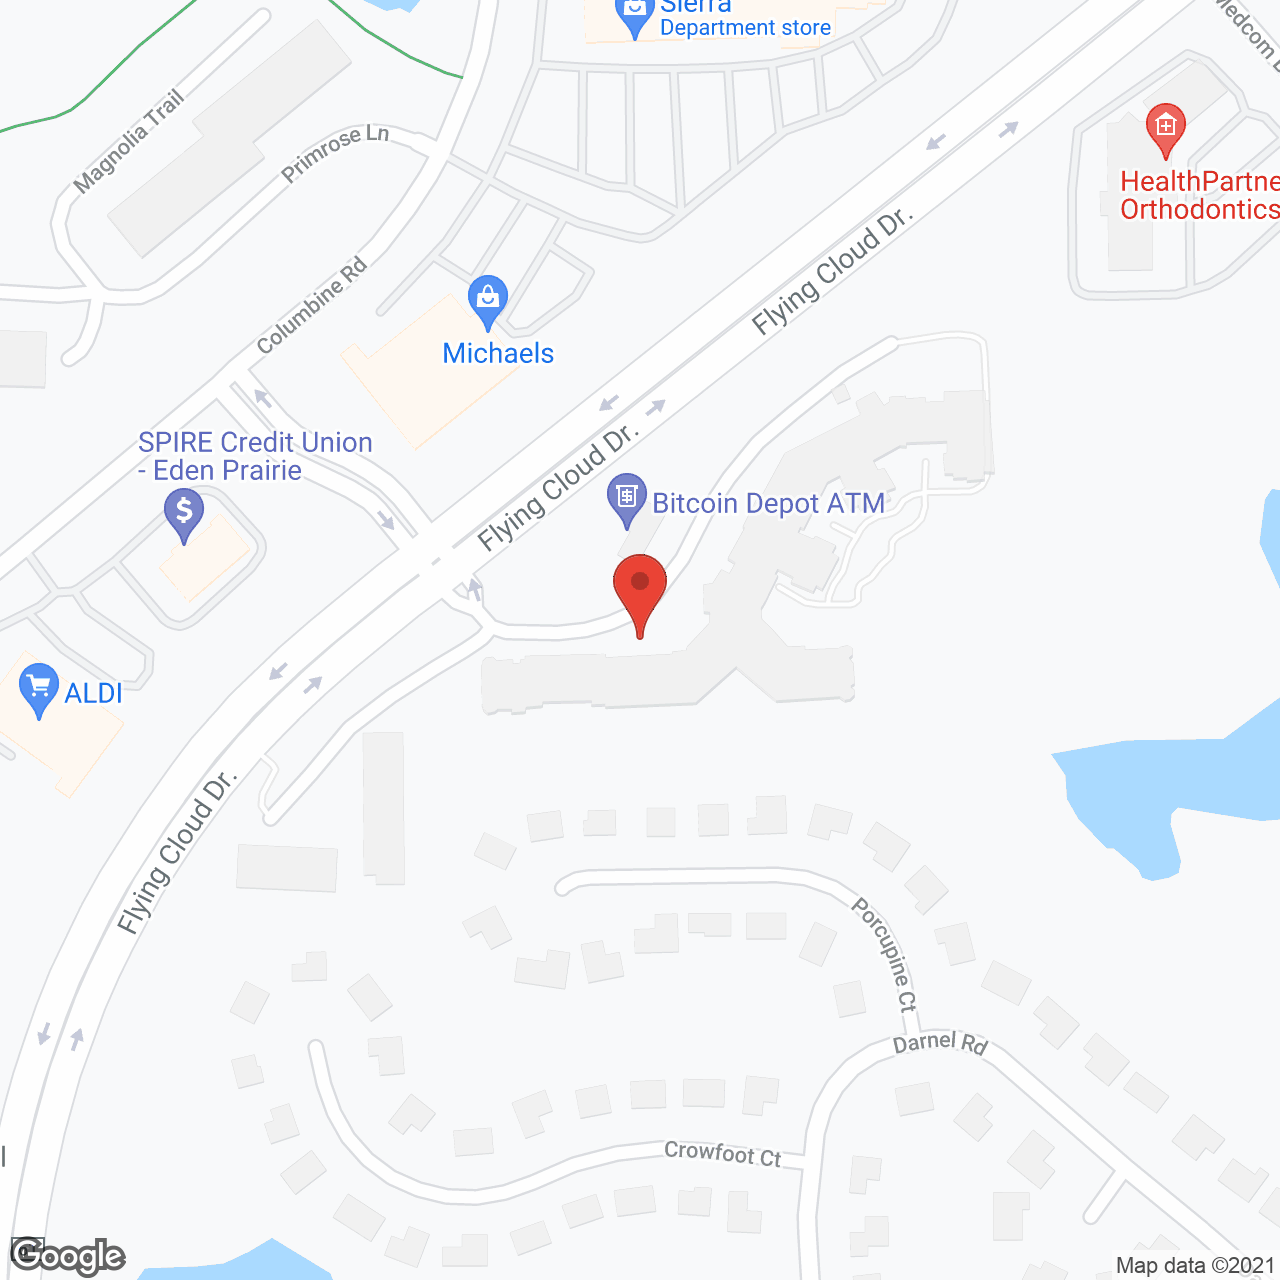 Summit Place Senior Campus in google map